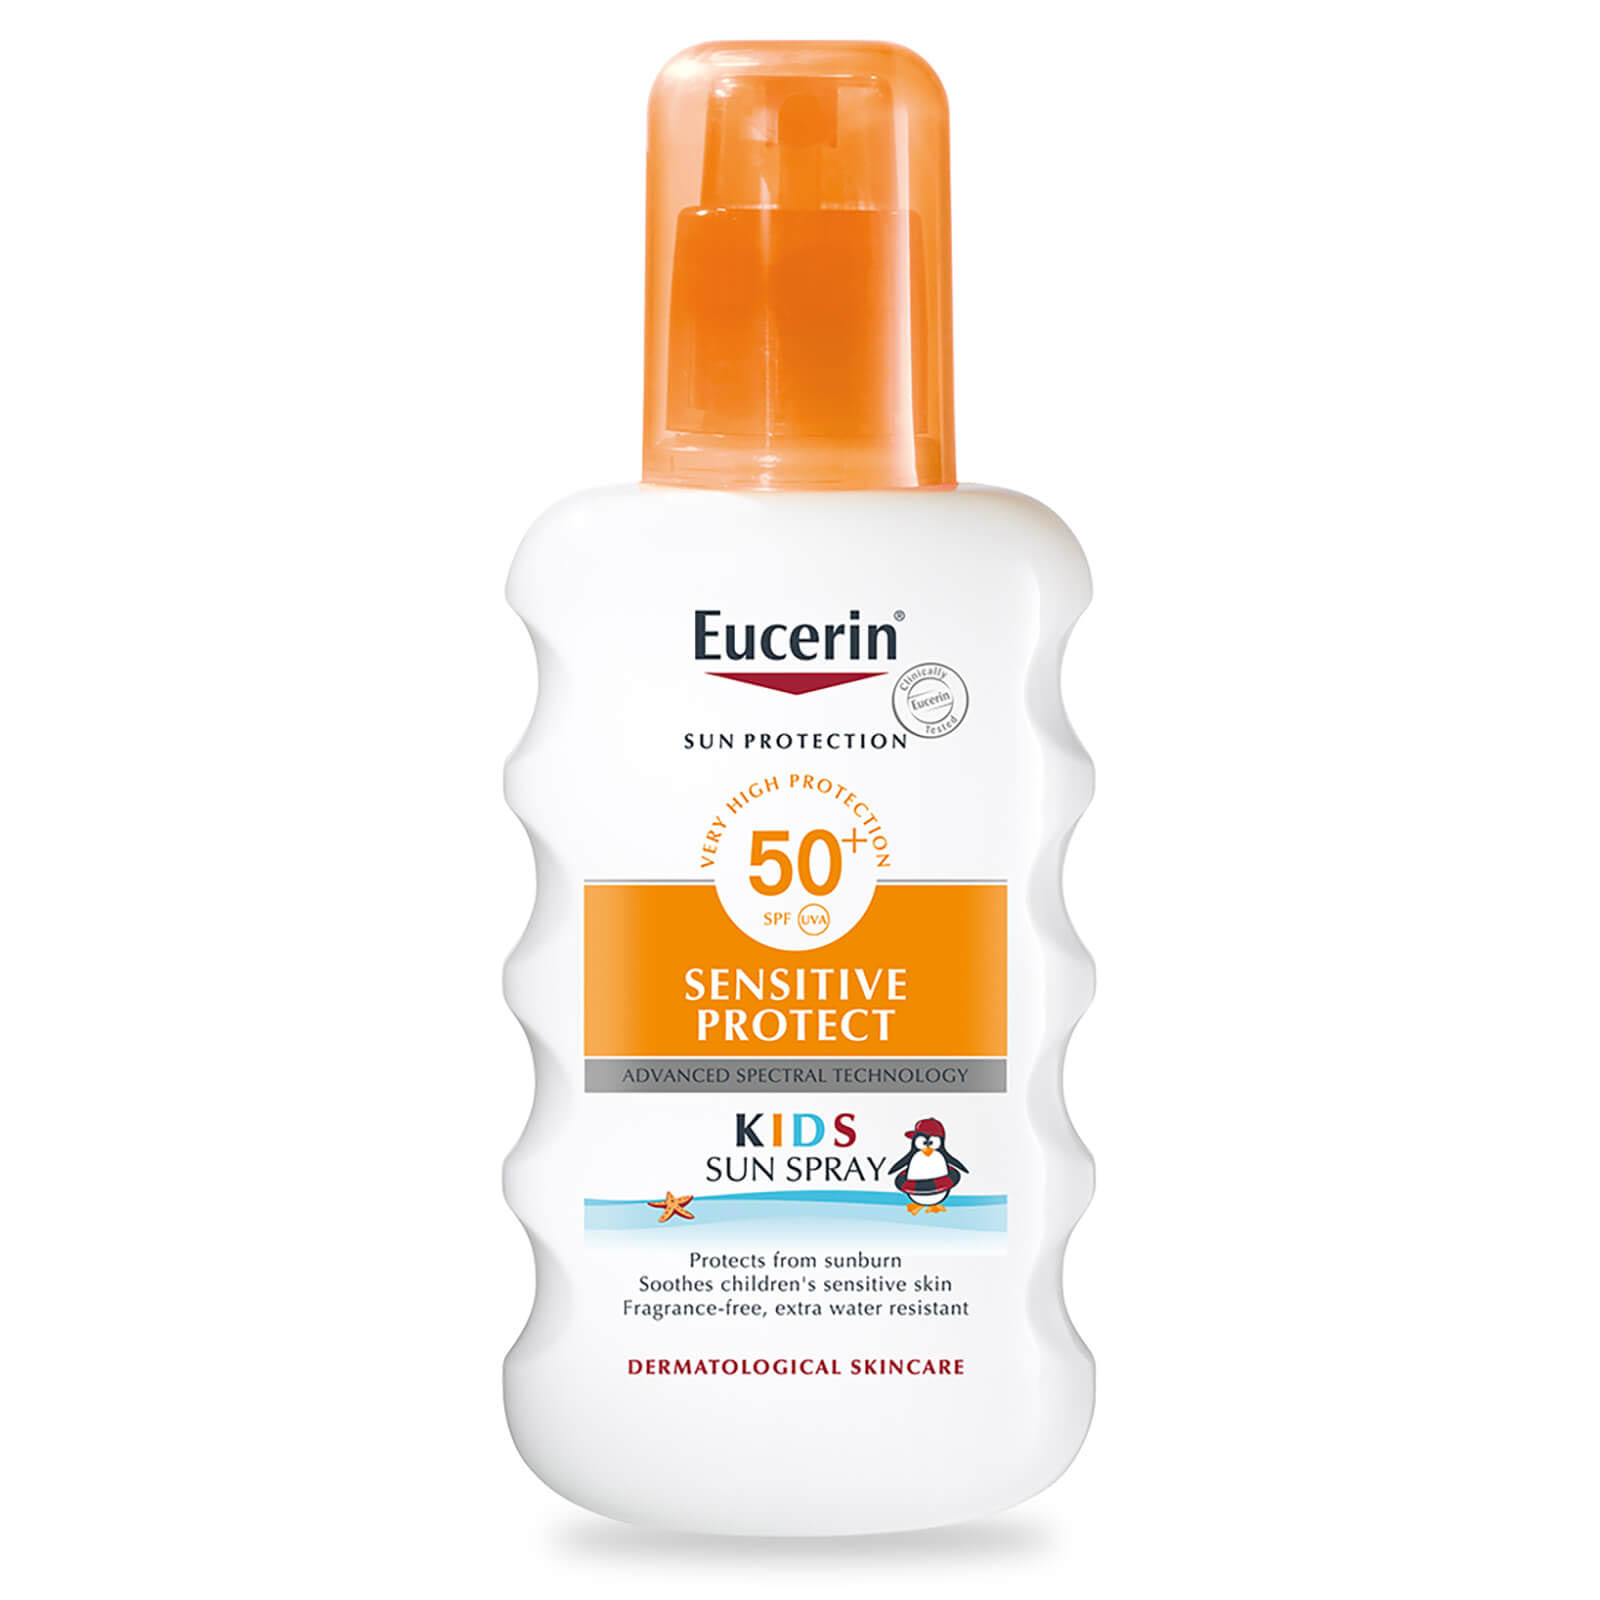 Eucerin Sun Protection Kids Sun Spray - SPF 50, 200ml